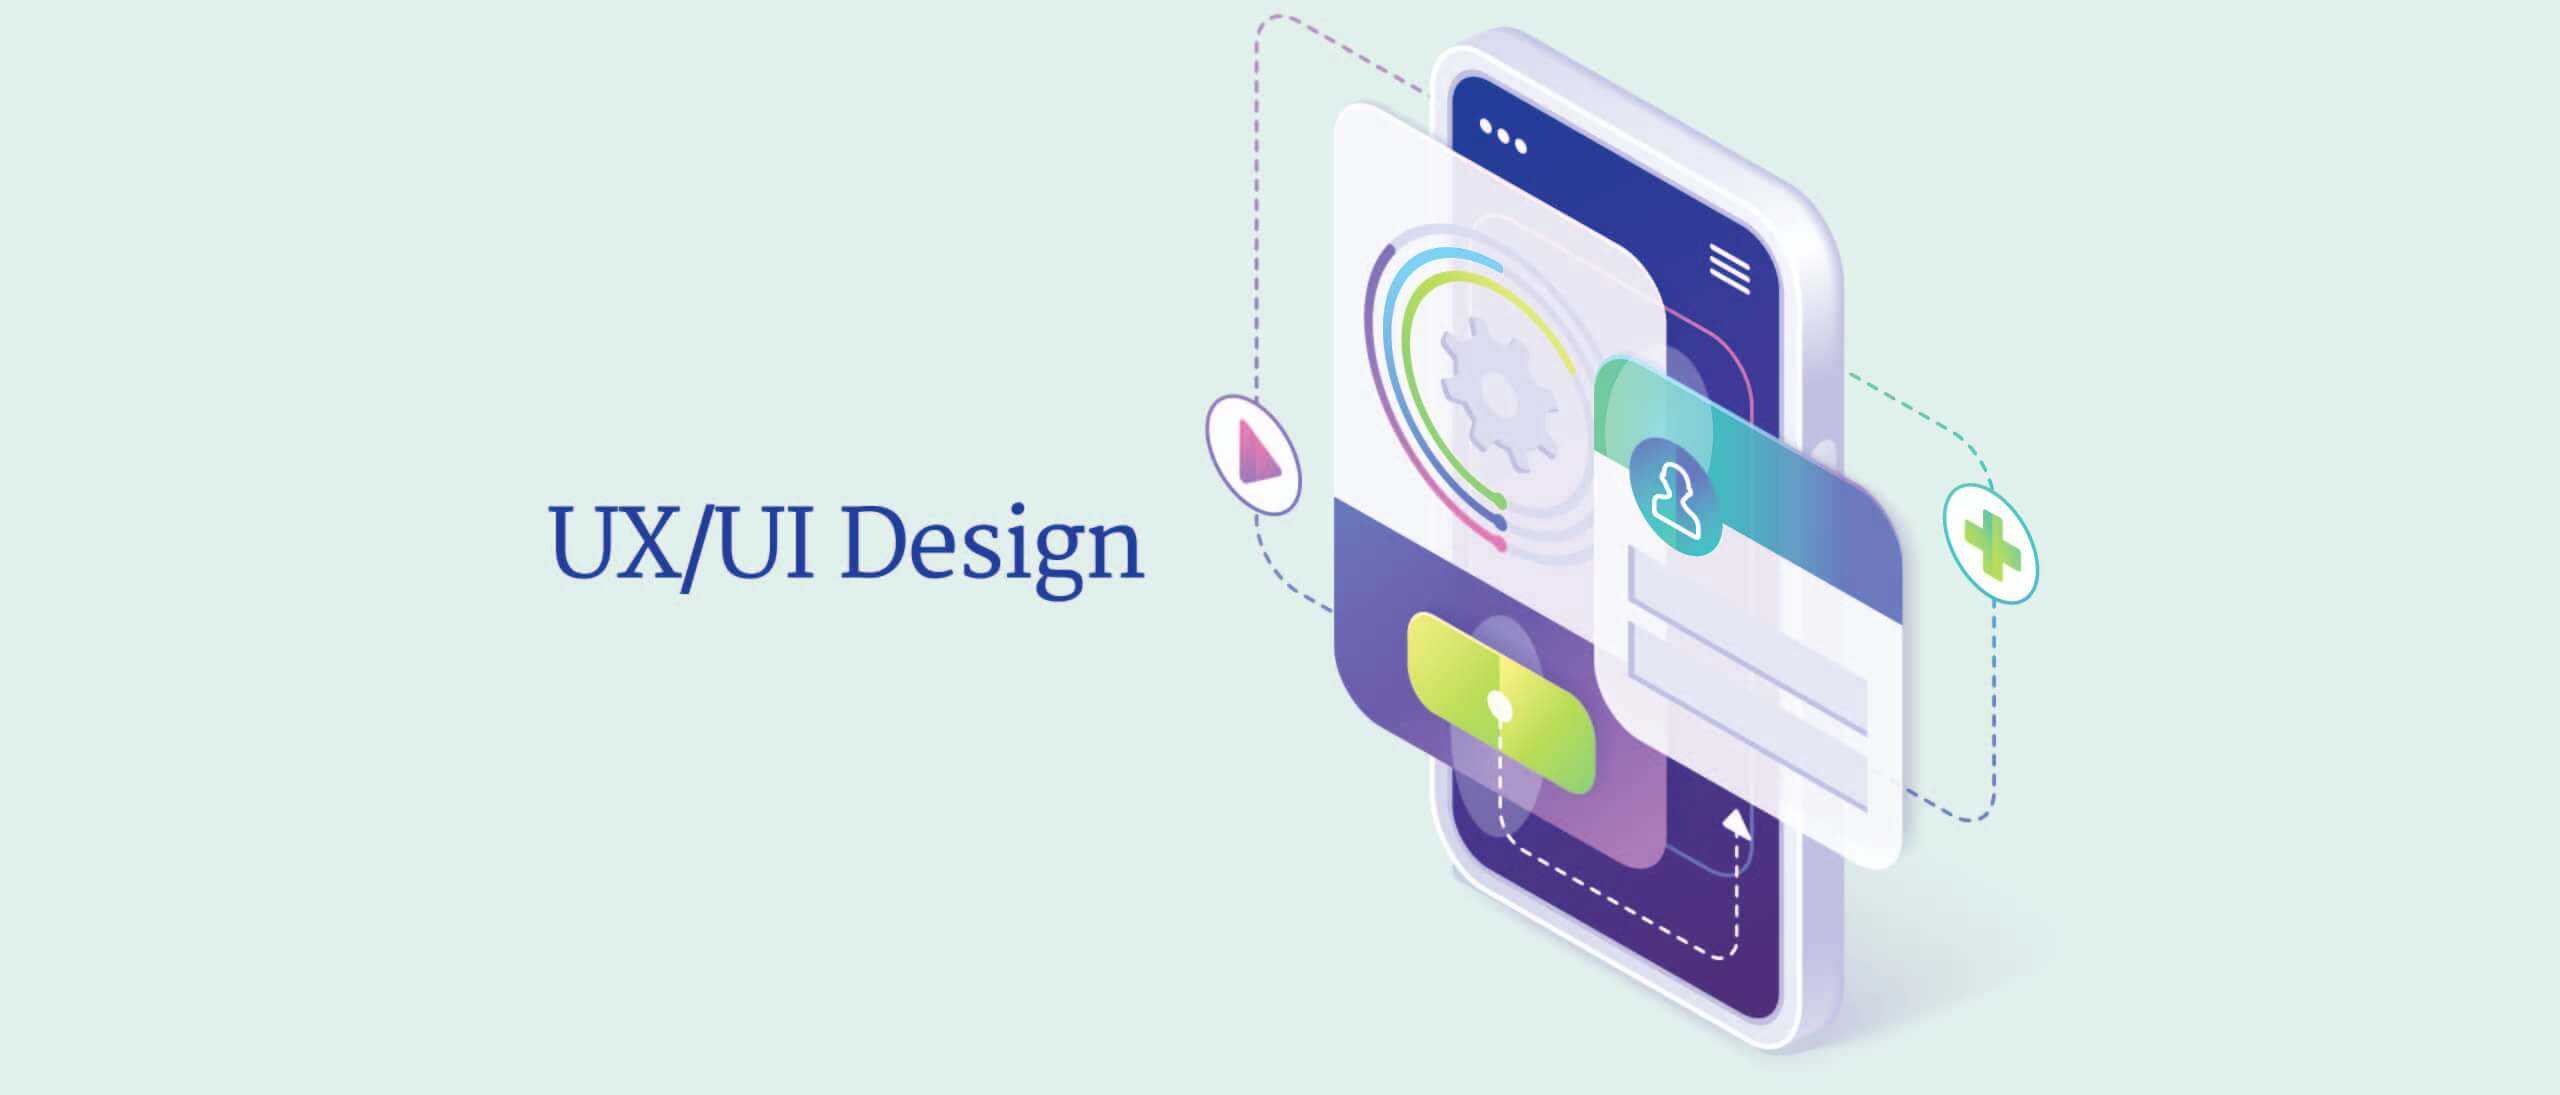 Khóa học thiết kế UI/UX theo chuẩn Apple